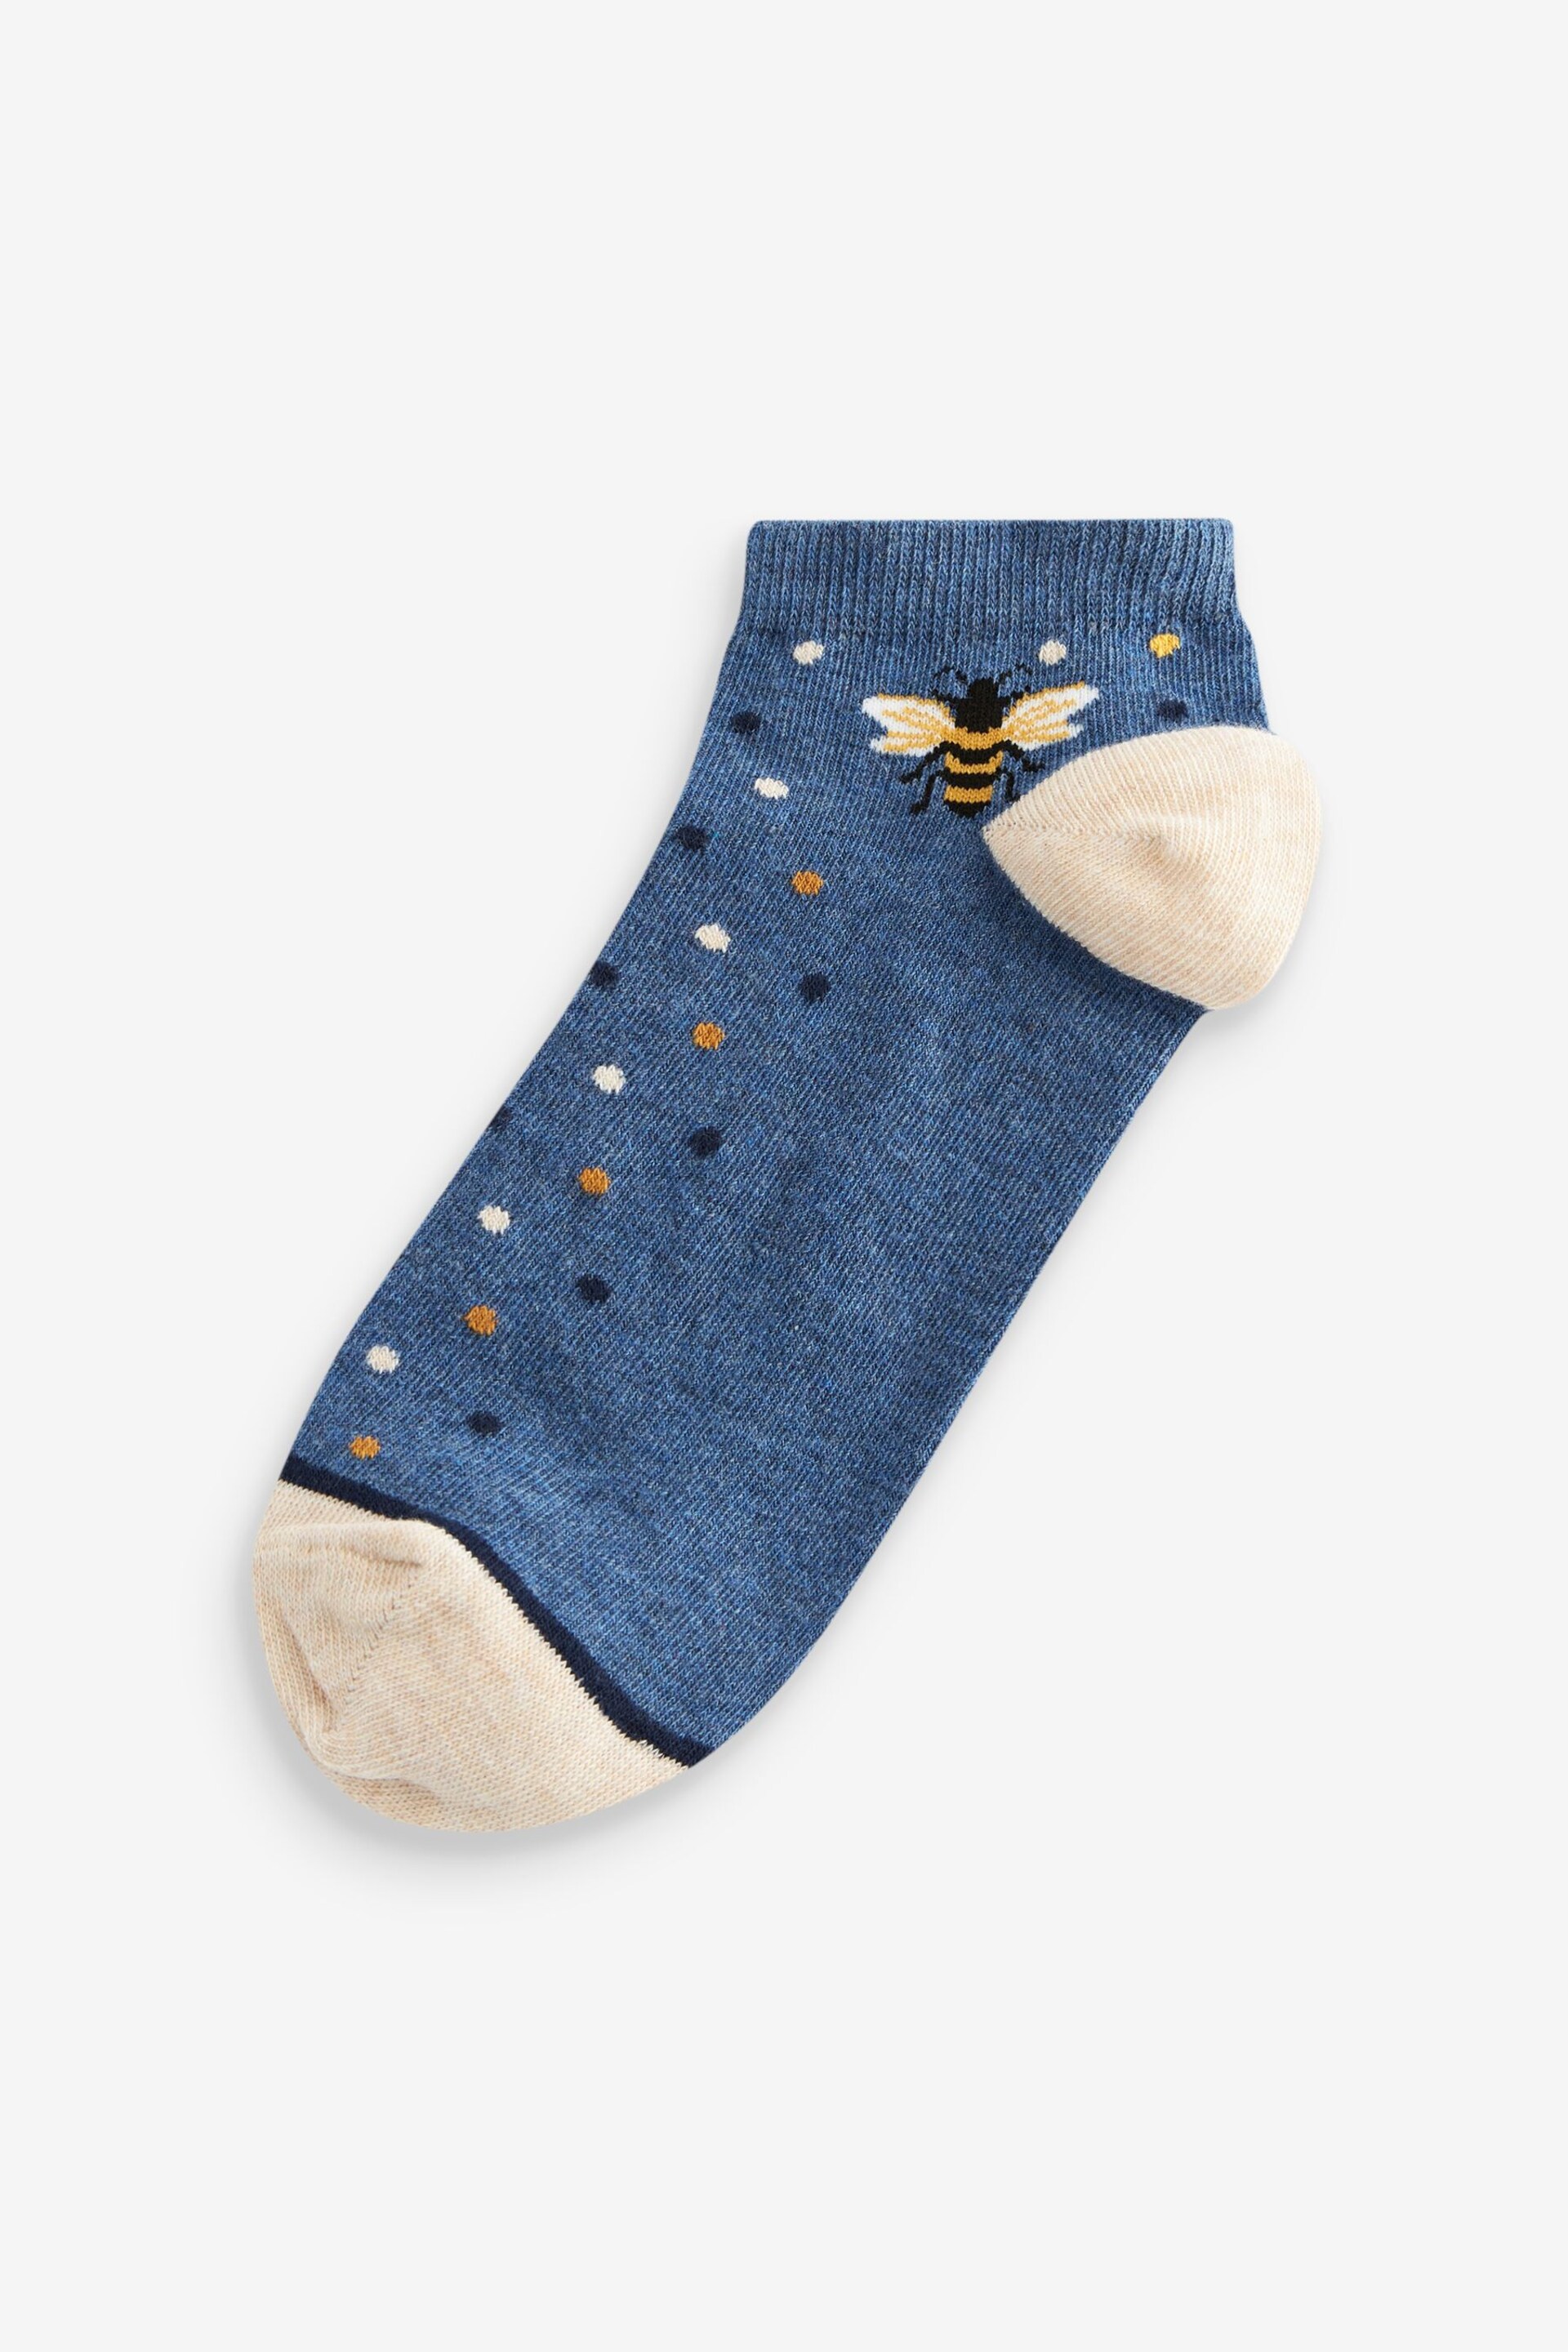 Navy/Ochre Bee Trainer Socks 5 Pack - Image 4 of 6